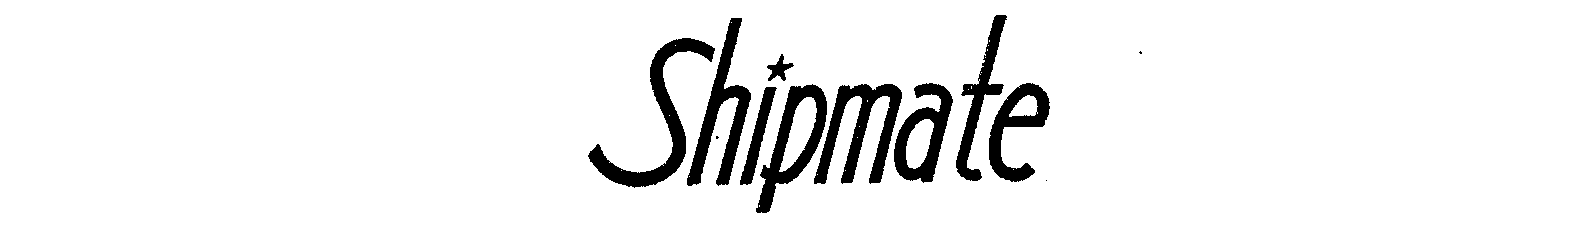 SHIPMATE